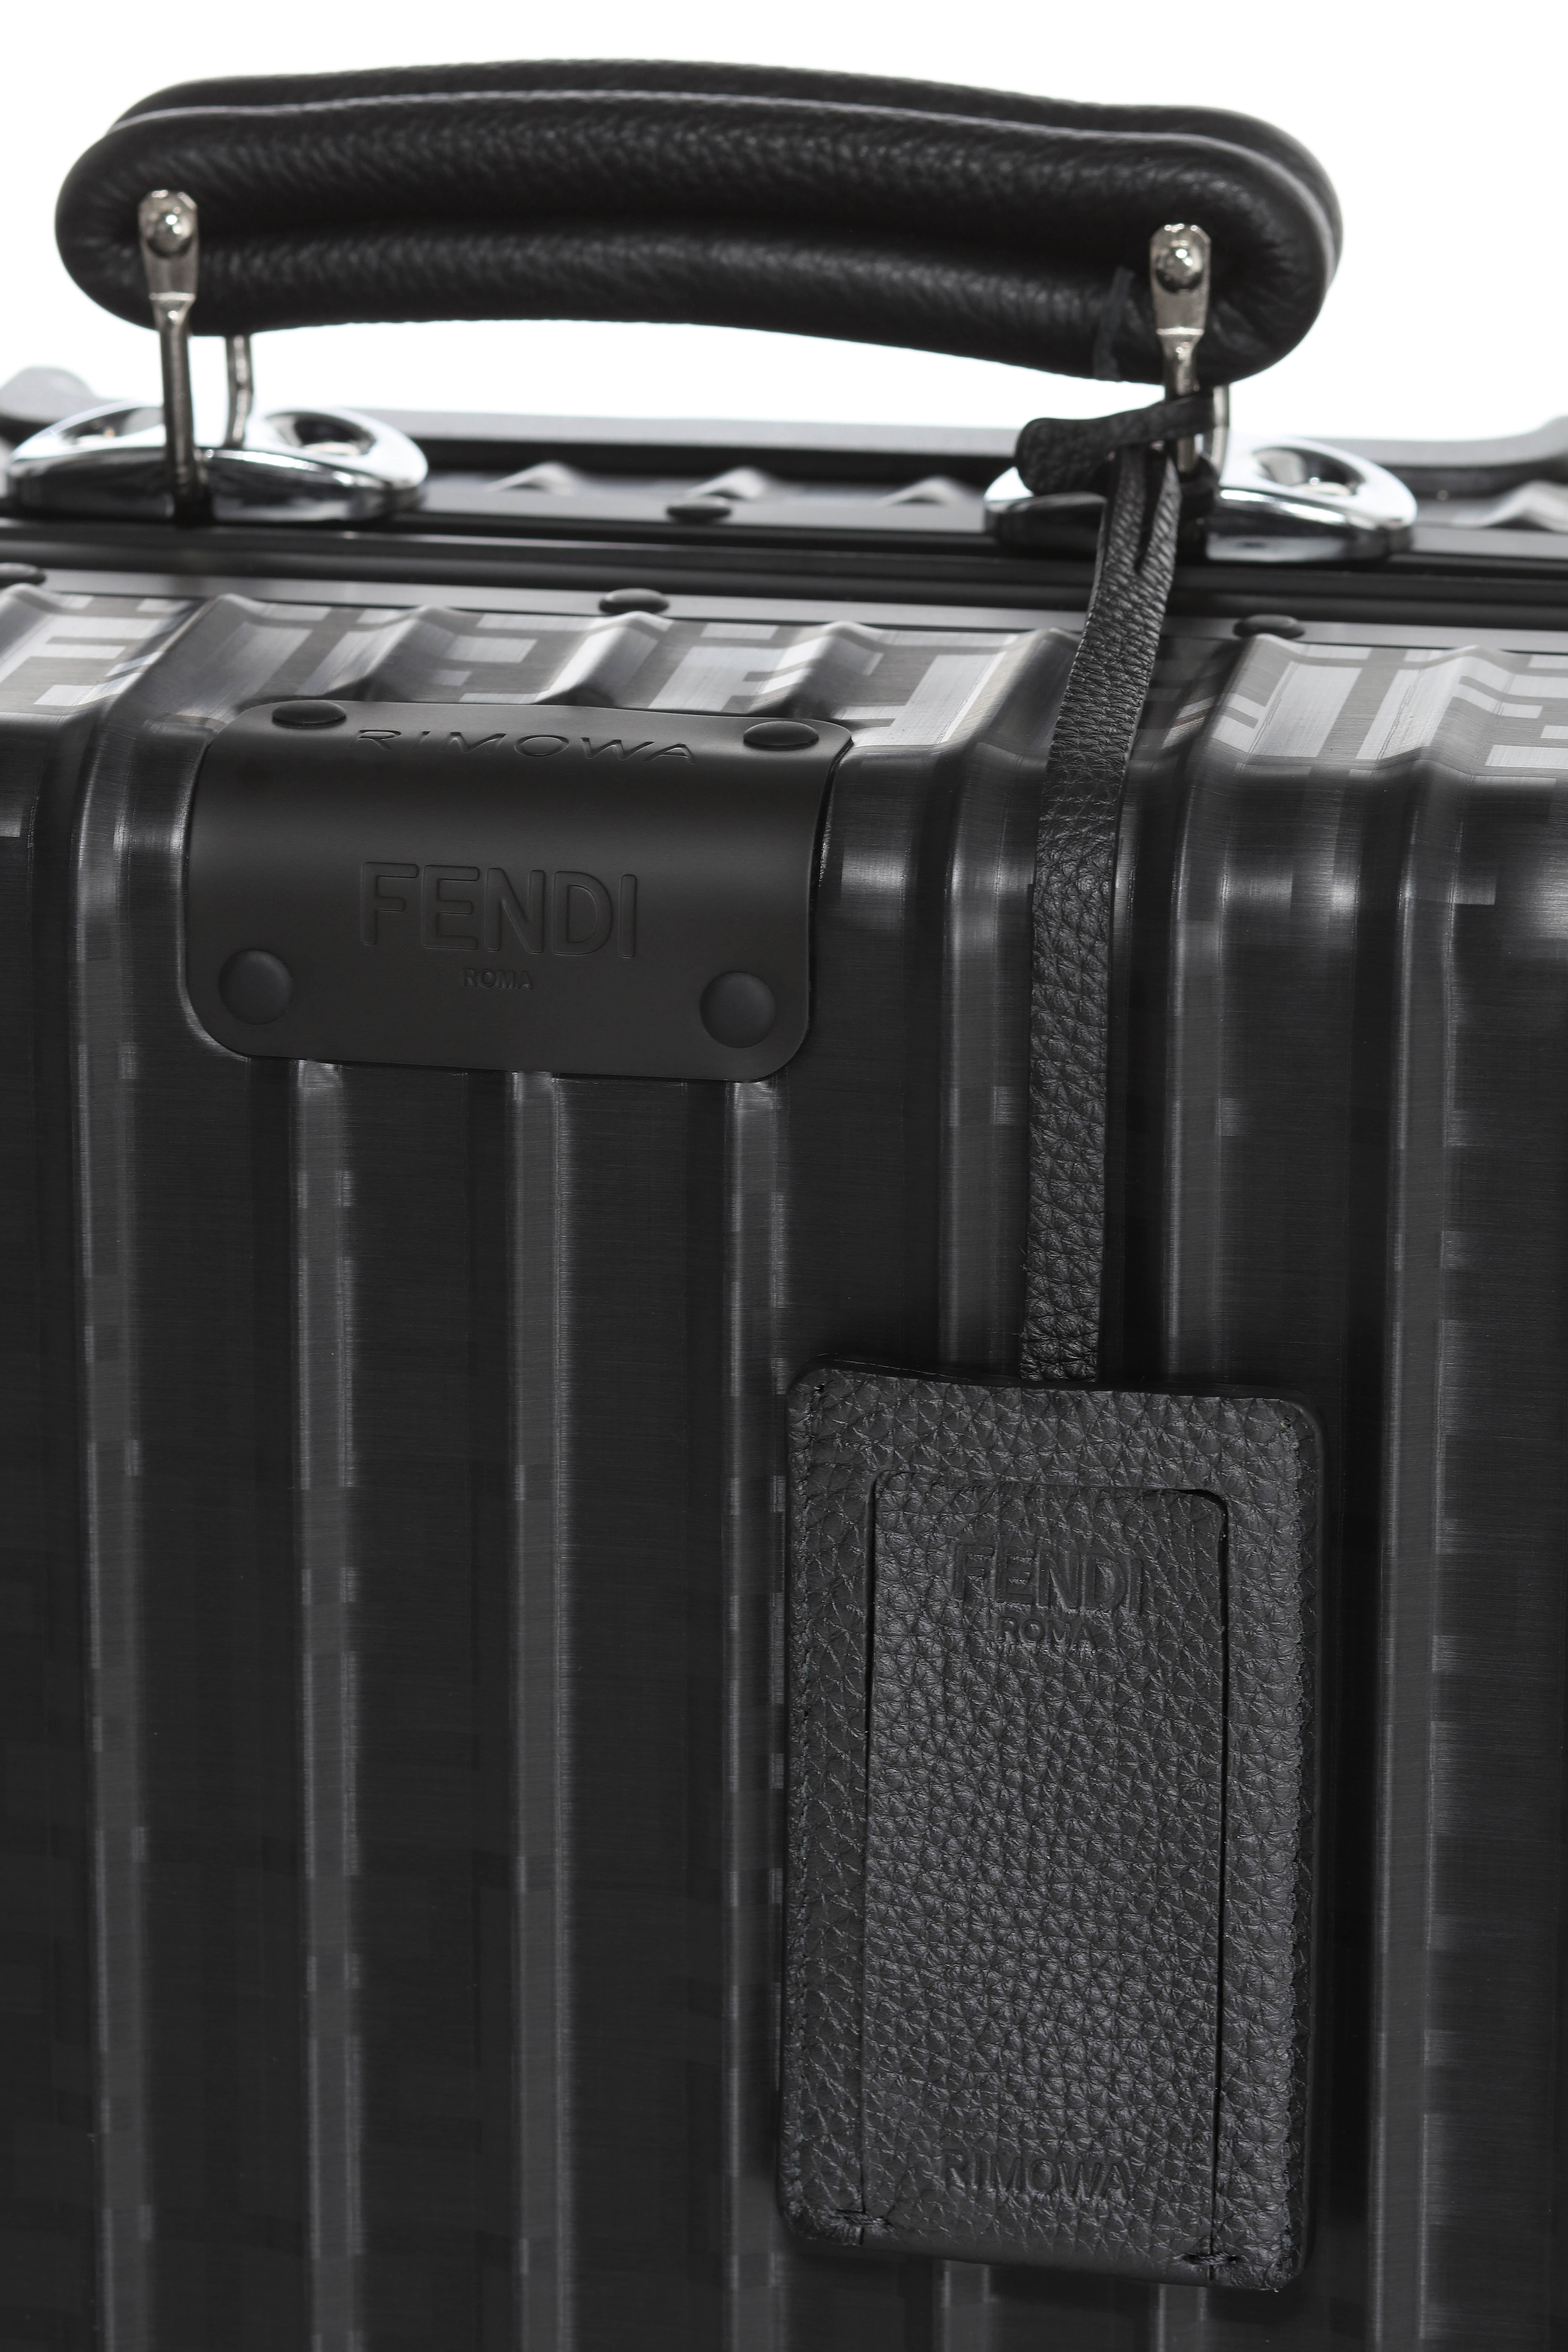 Fendi, Rimowa Team on Suitcase – WWD